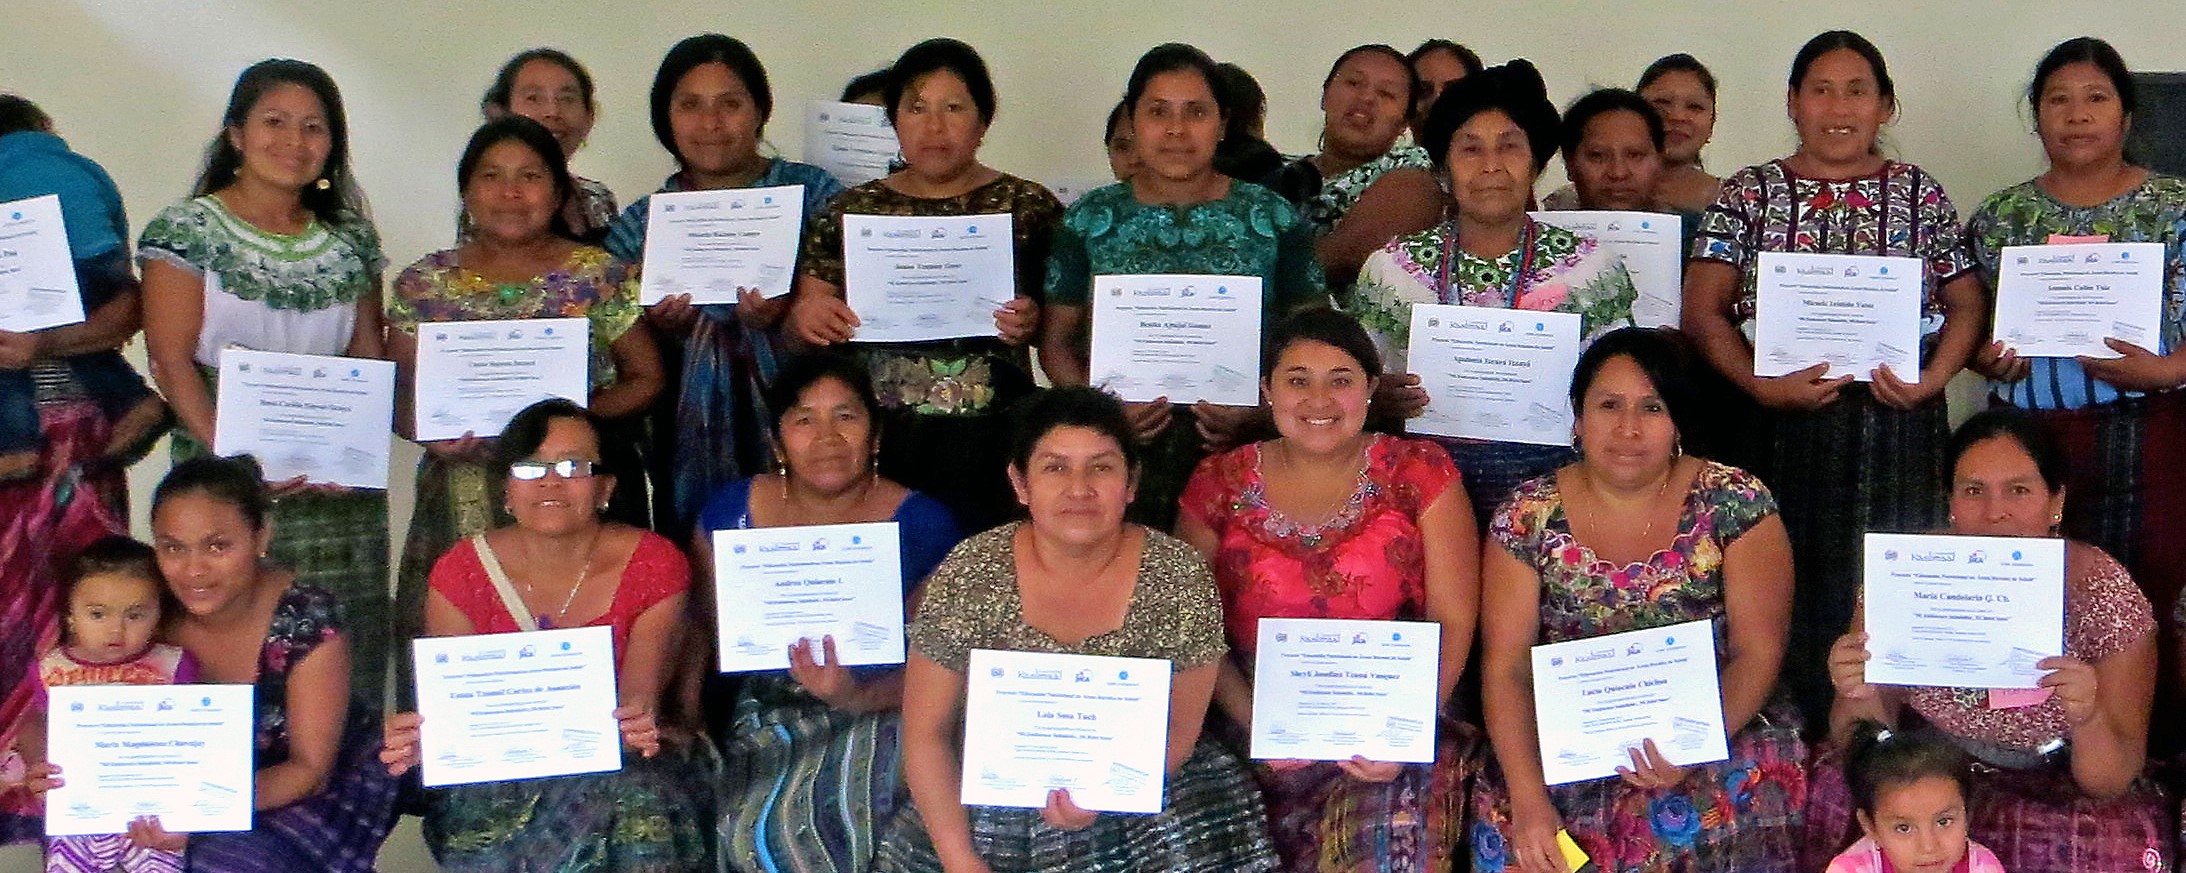 2021 Fundraiser: Prevention of Chronic Disease in Guatemala